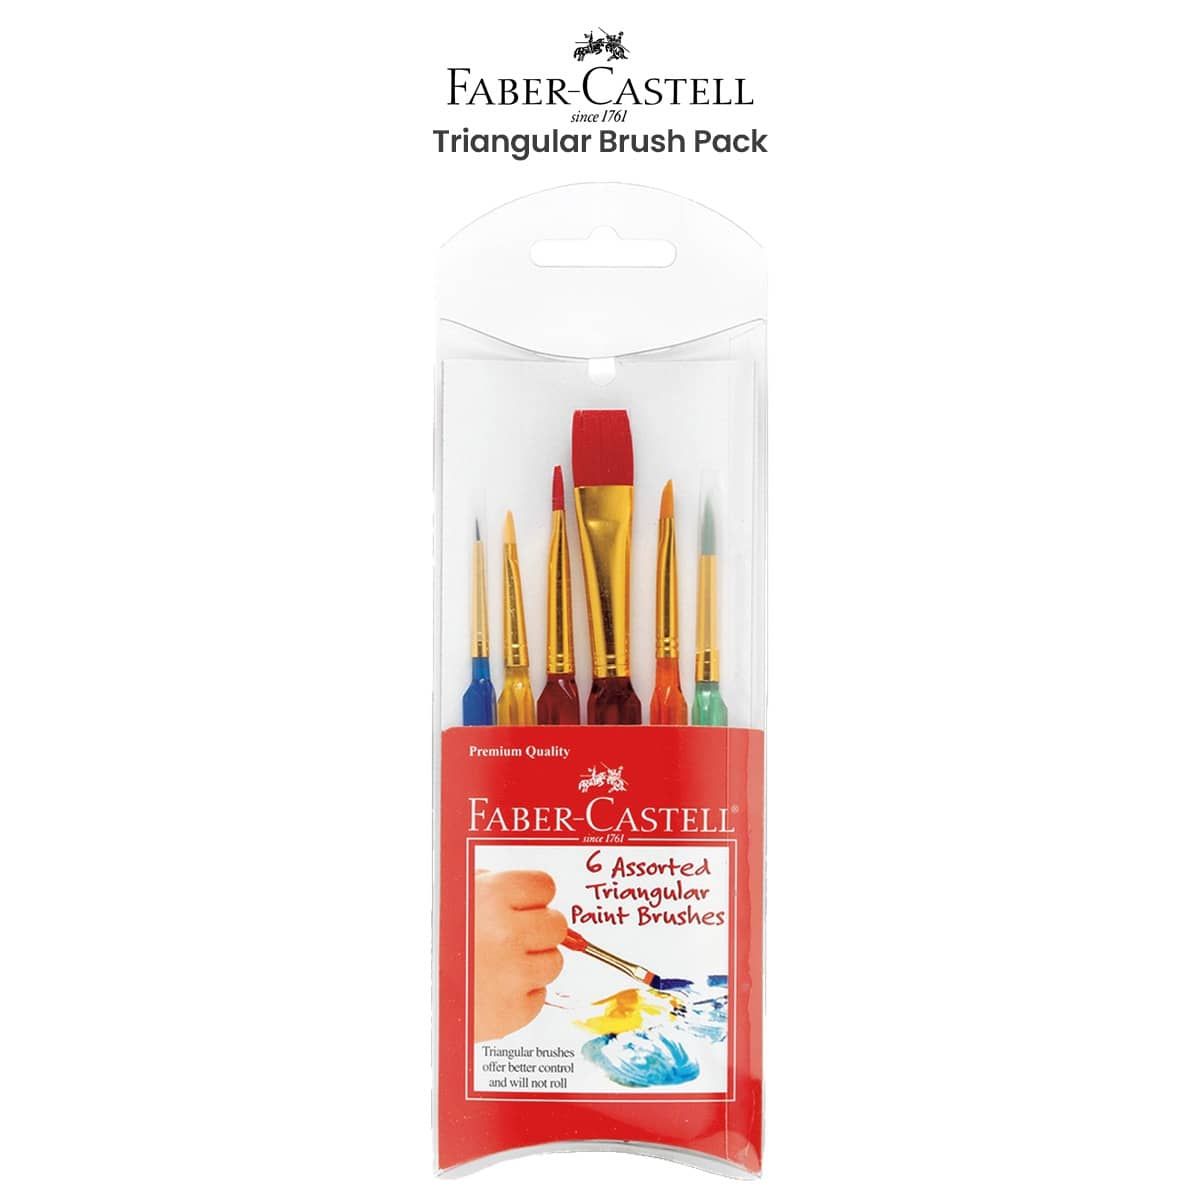 Faber-Castell Triangular Brush Pack